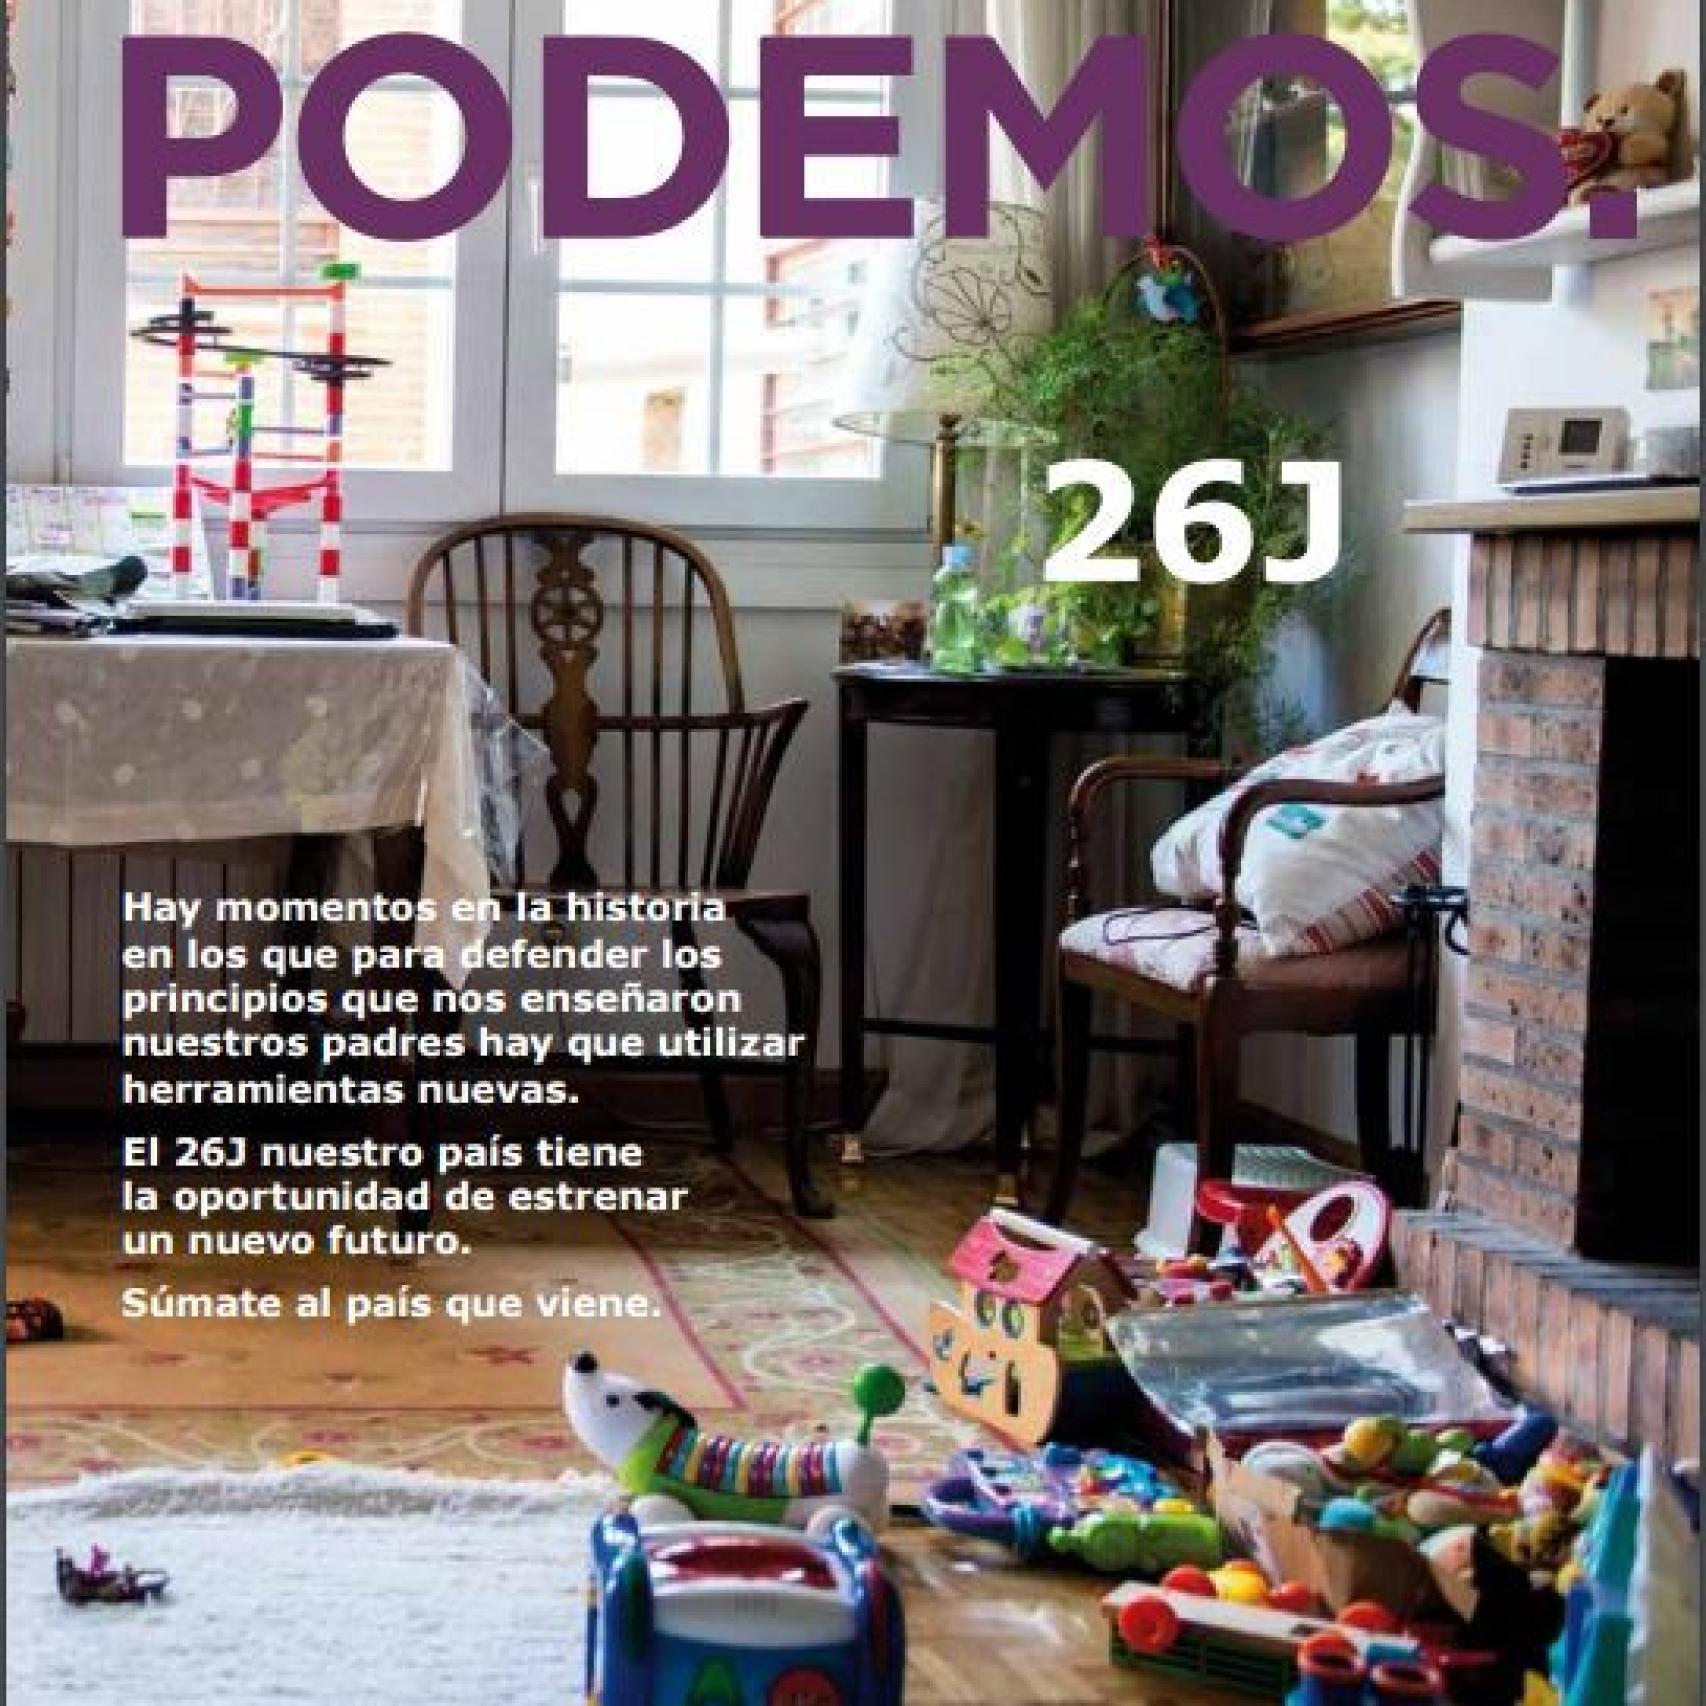 Portada del catálogo-programa de Podemos-Ikea.